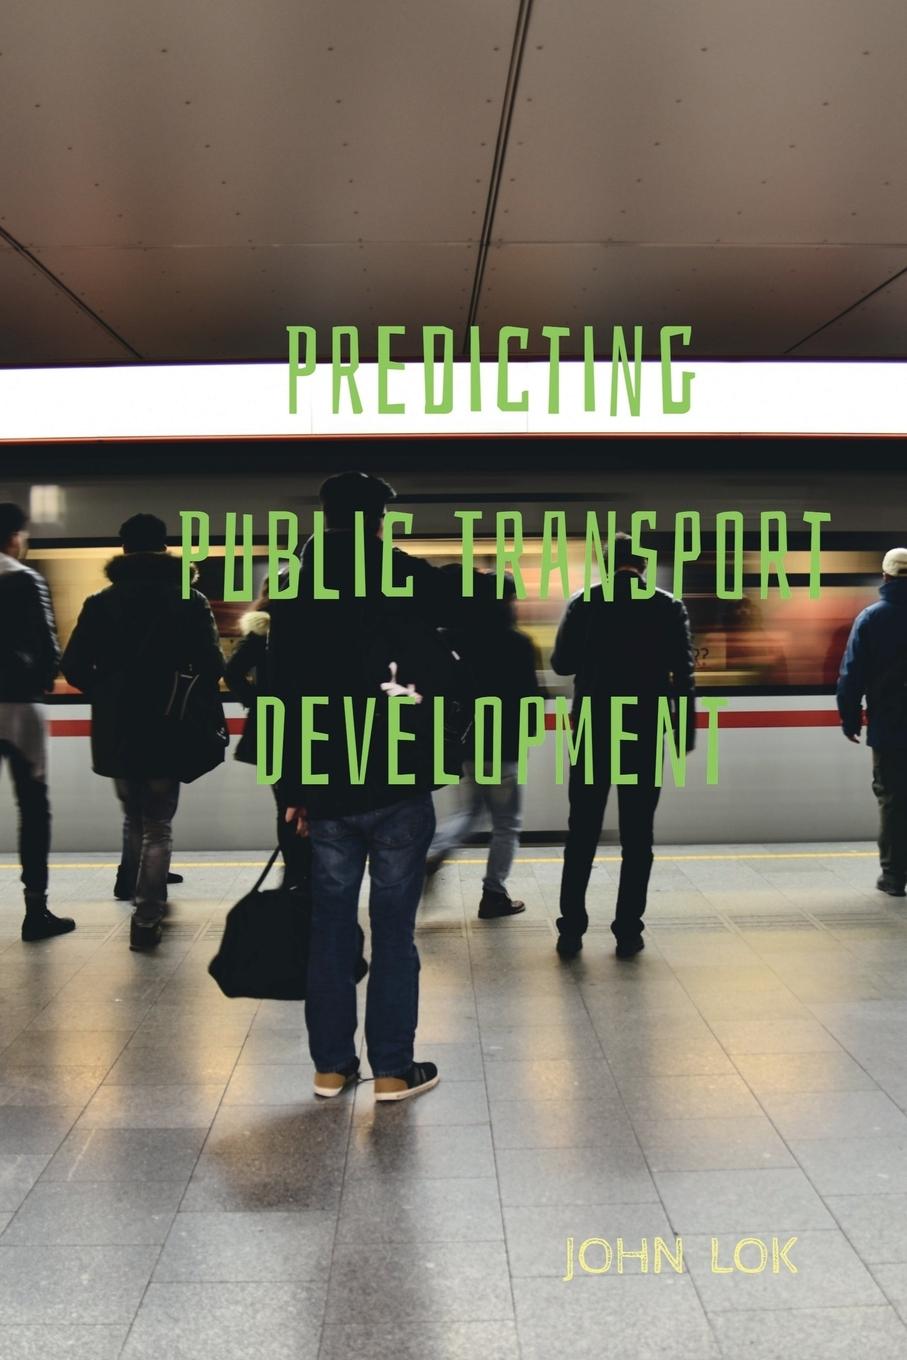 Kniha Predicting Public Transport Development 